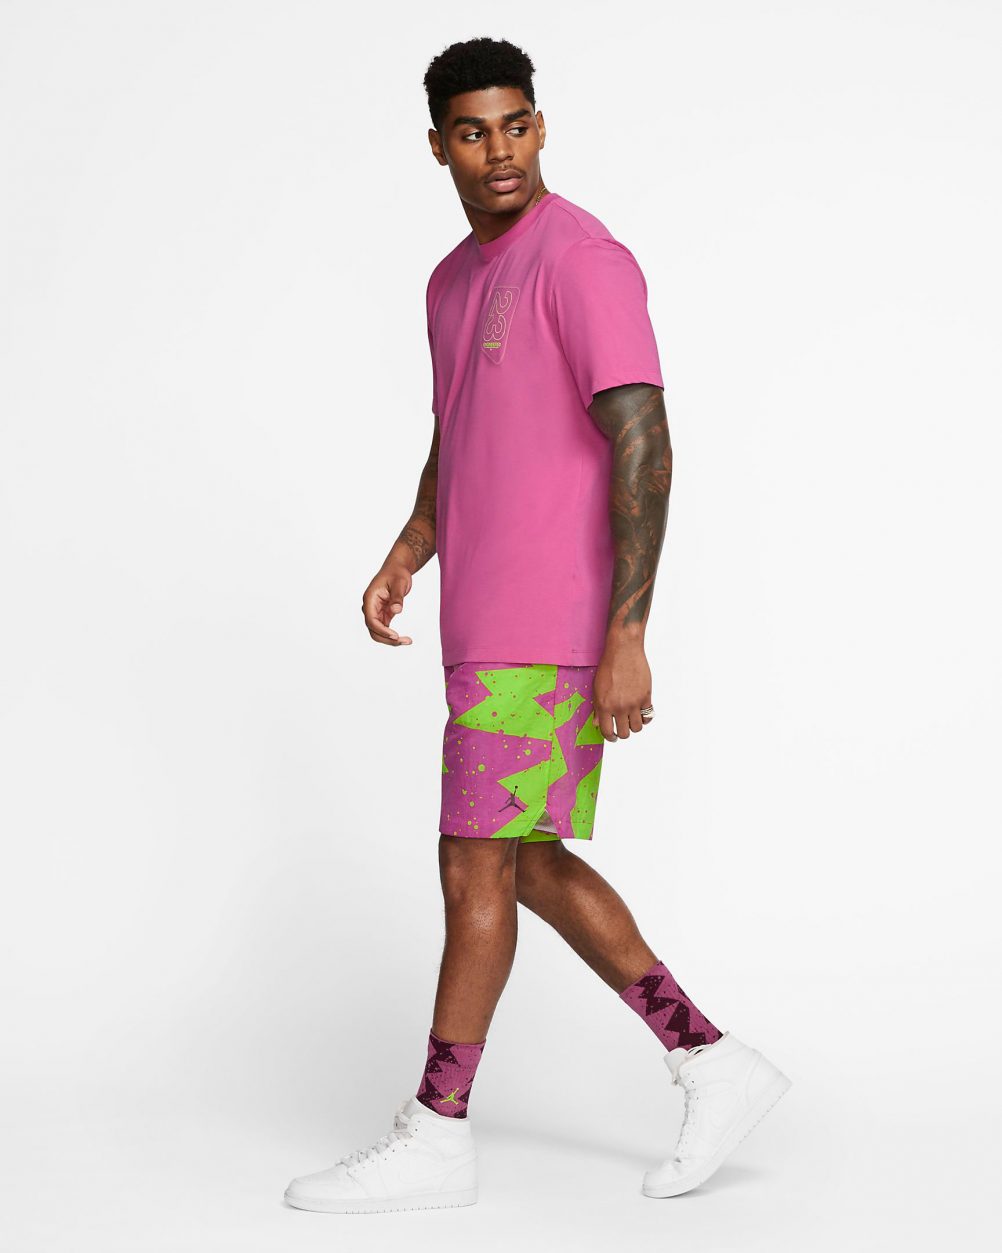 Jordan 1 Low Active Fuchsia Shirt Shorts Outfit | SneakerFits.com